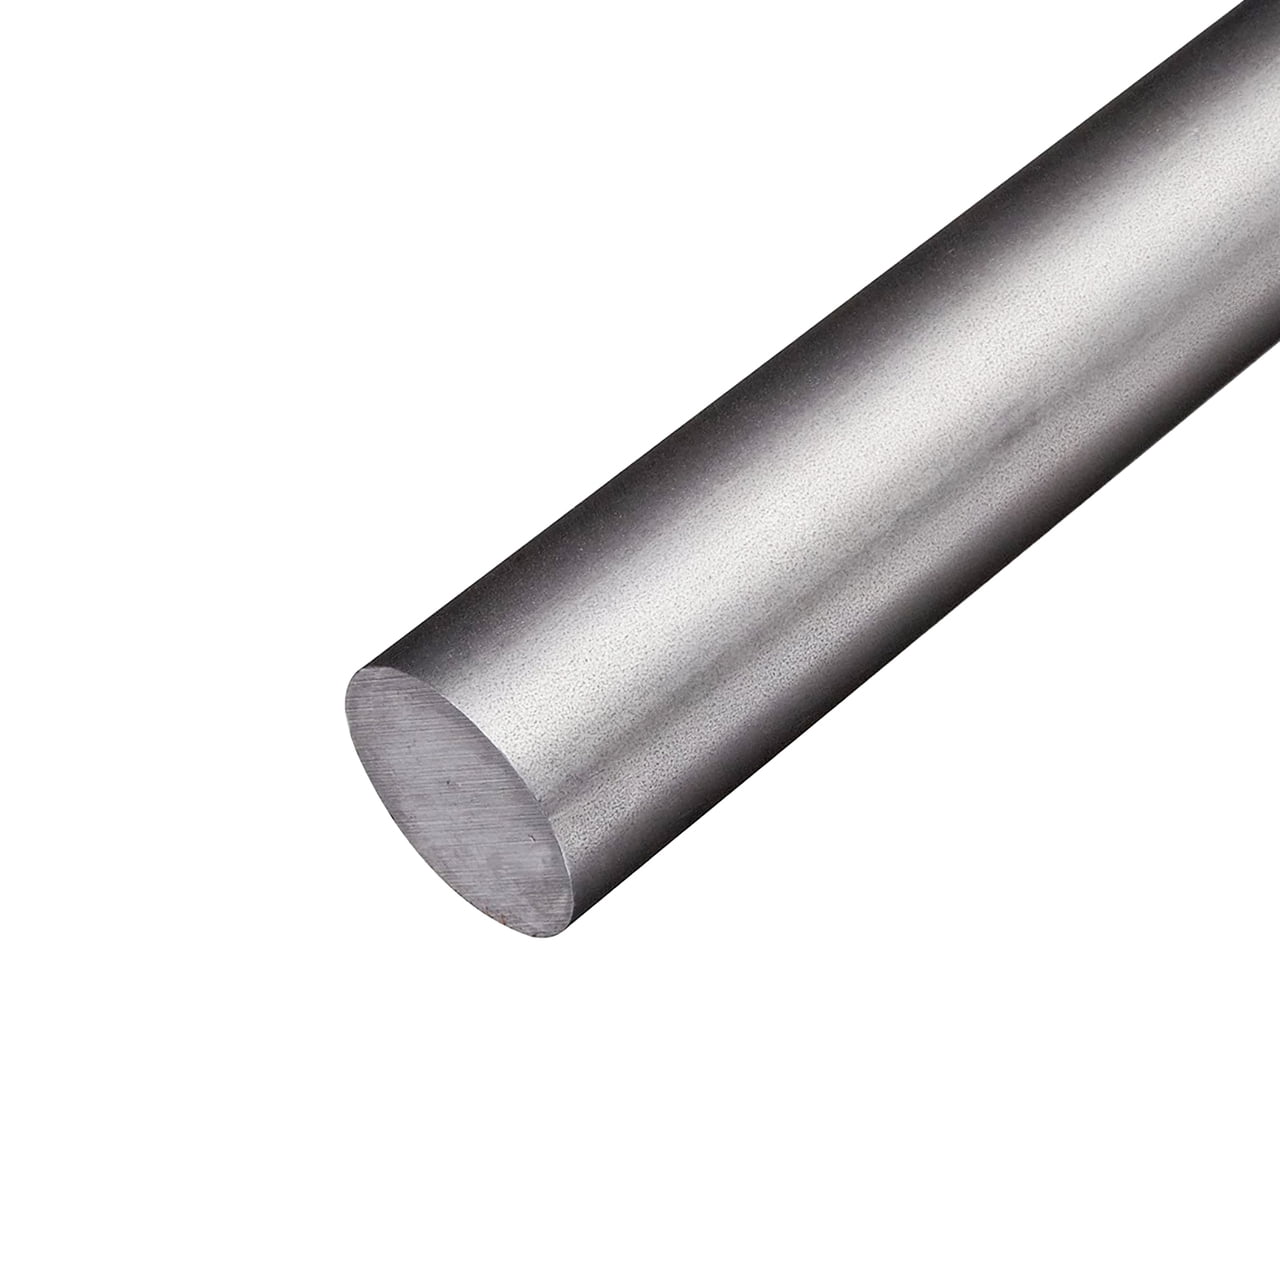 6101-T61 Aluminum Round Edge Rectangle Bar 1/4" x 6" x 36" 